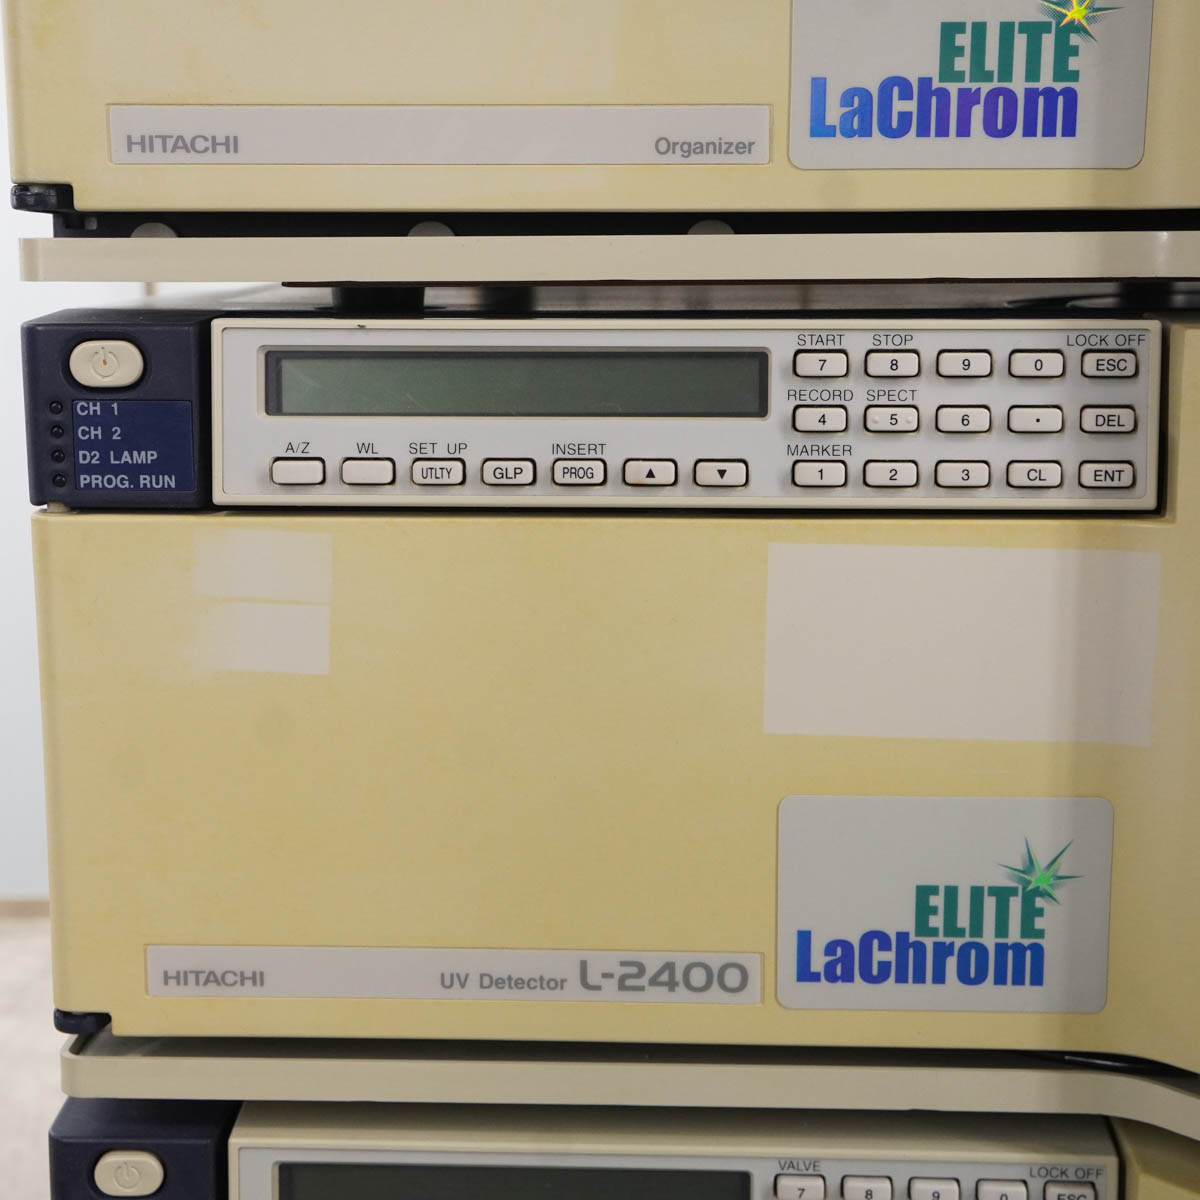 [DW]USED 8日保証 セット HITACHI L-2400 L-2130 L-2200 L-2300 Organizer HPLC ELITE LaChrom UV Detector Pump Autosampl...[04643-0011] - 7